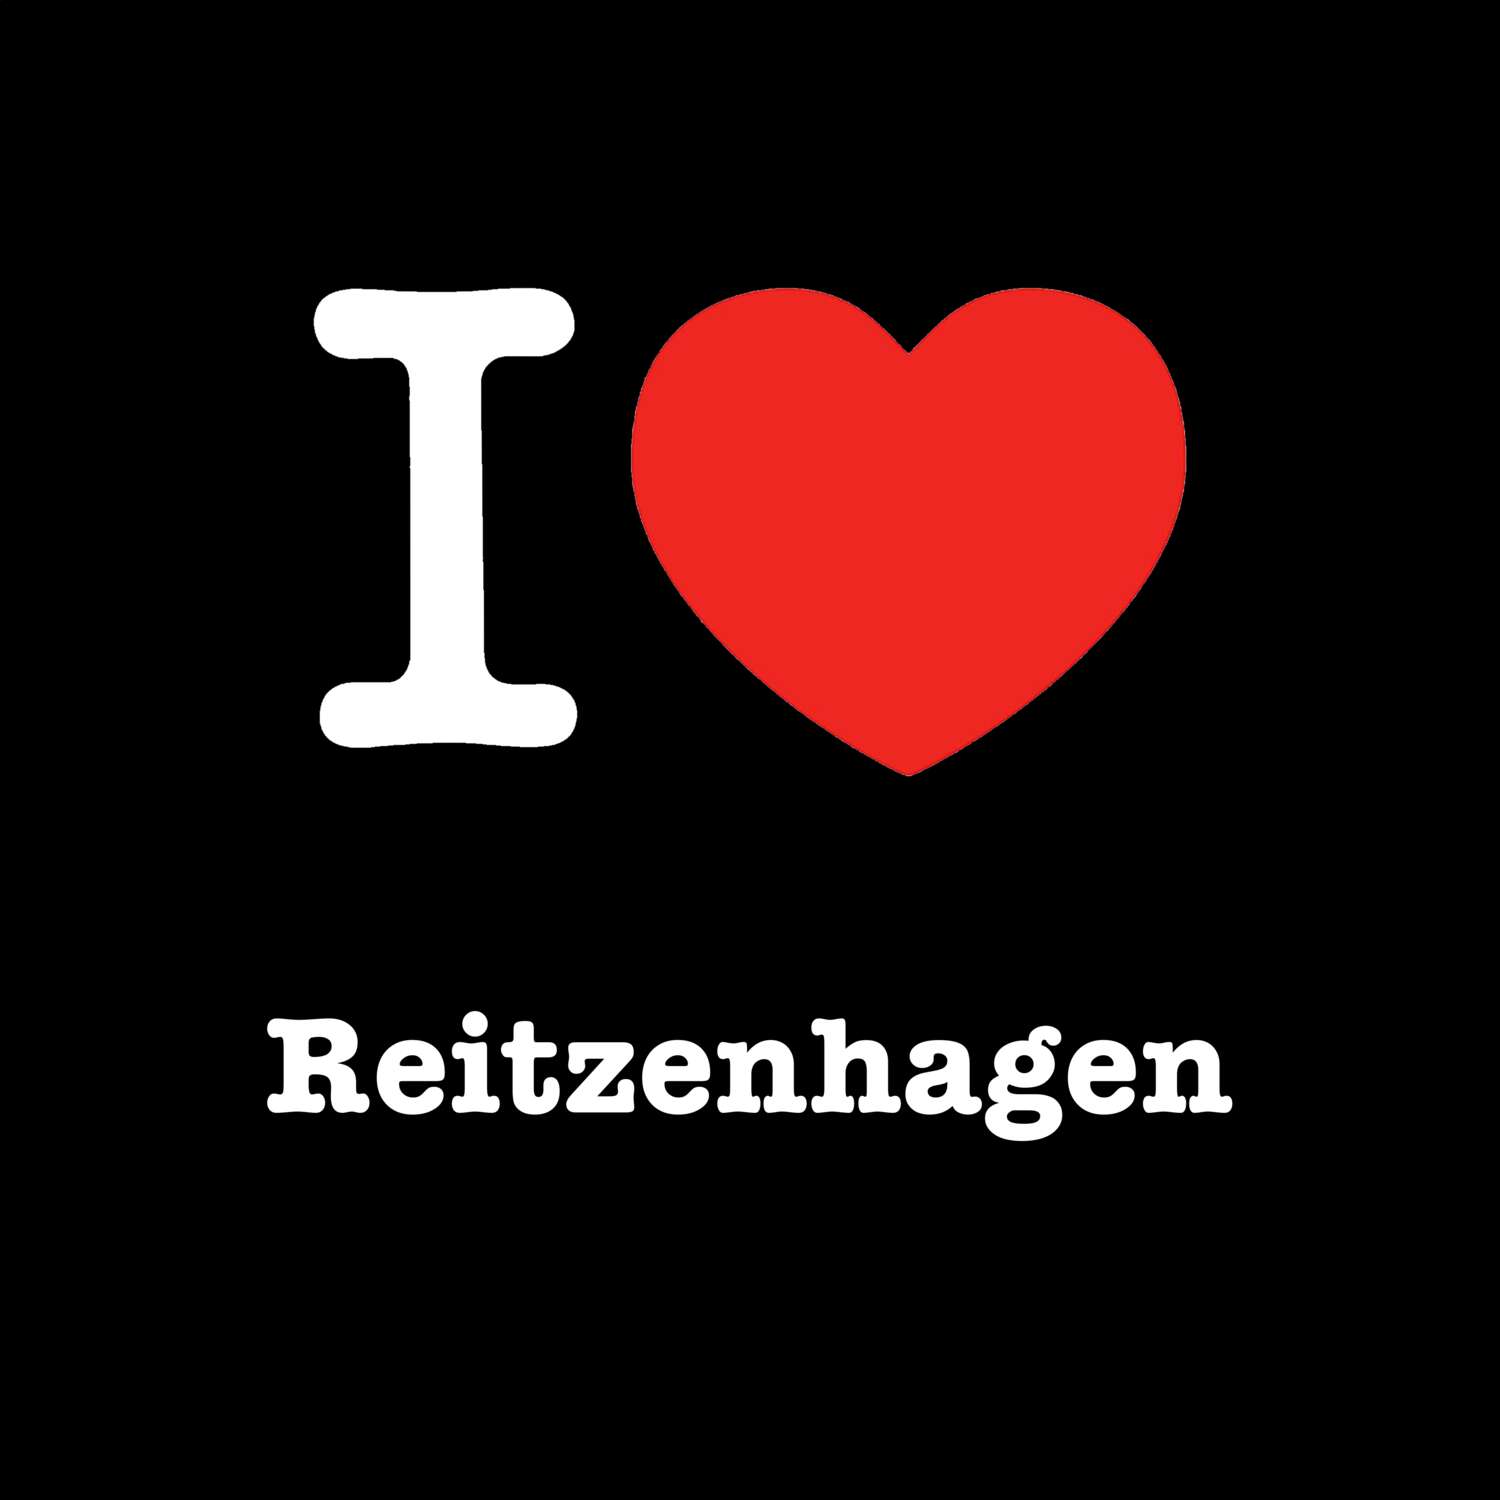 Reitzenhagen T-Shirt »I love«